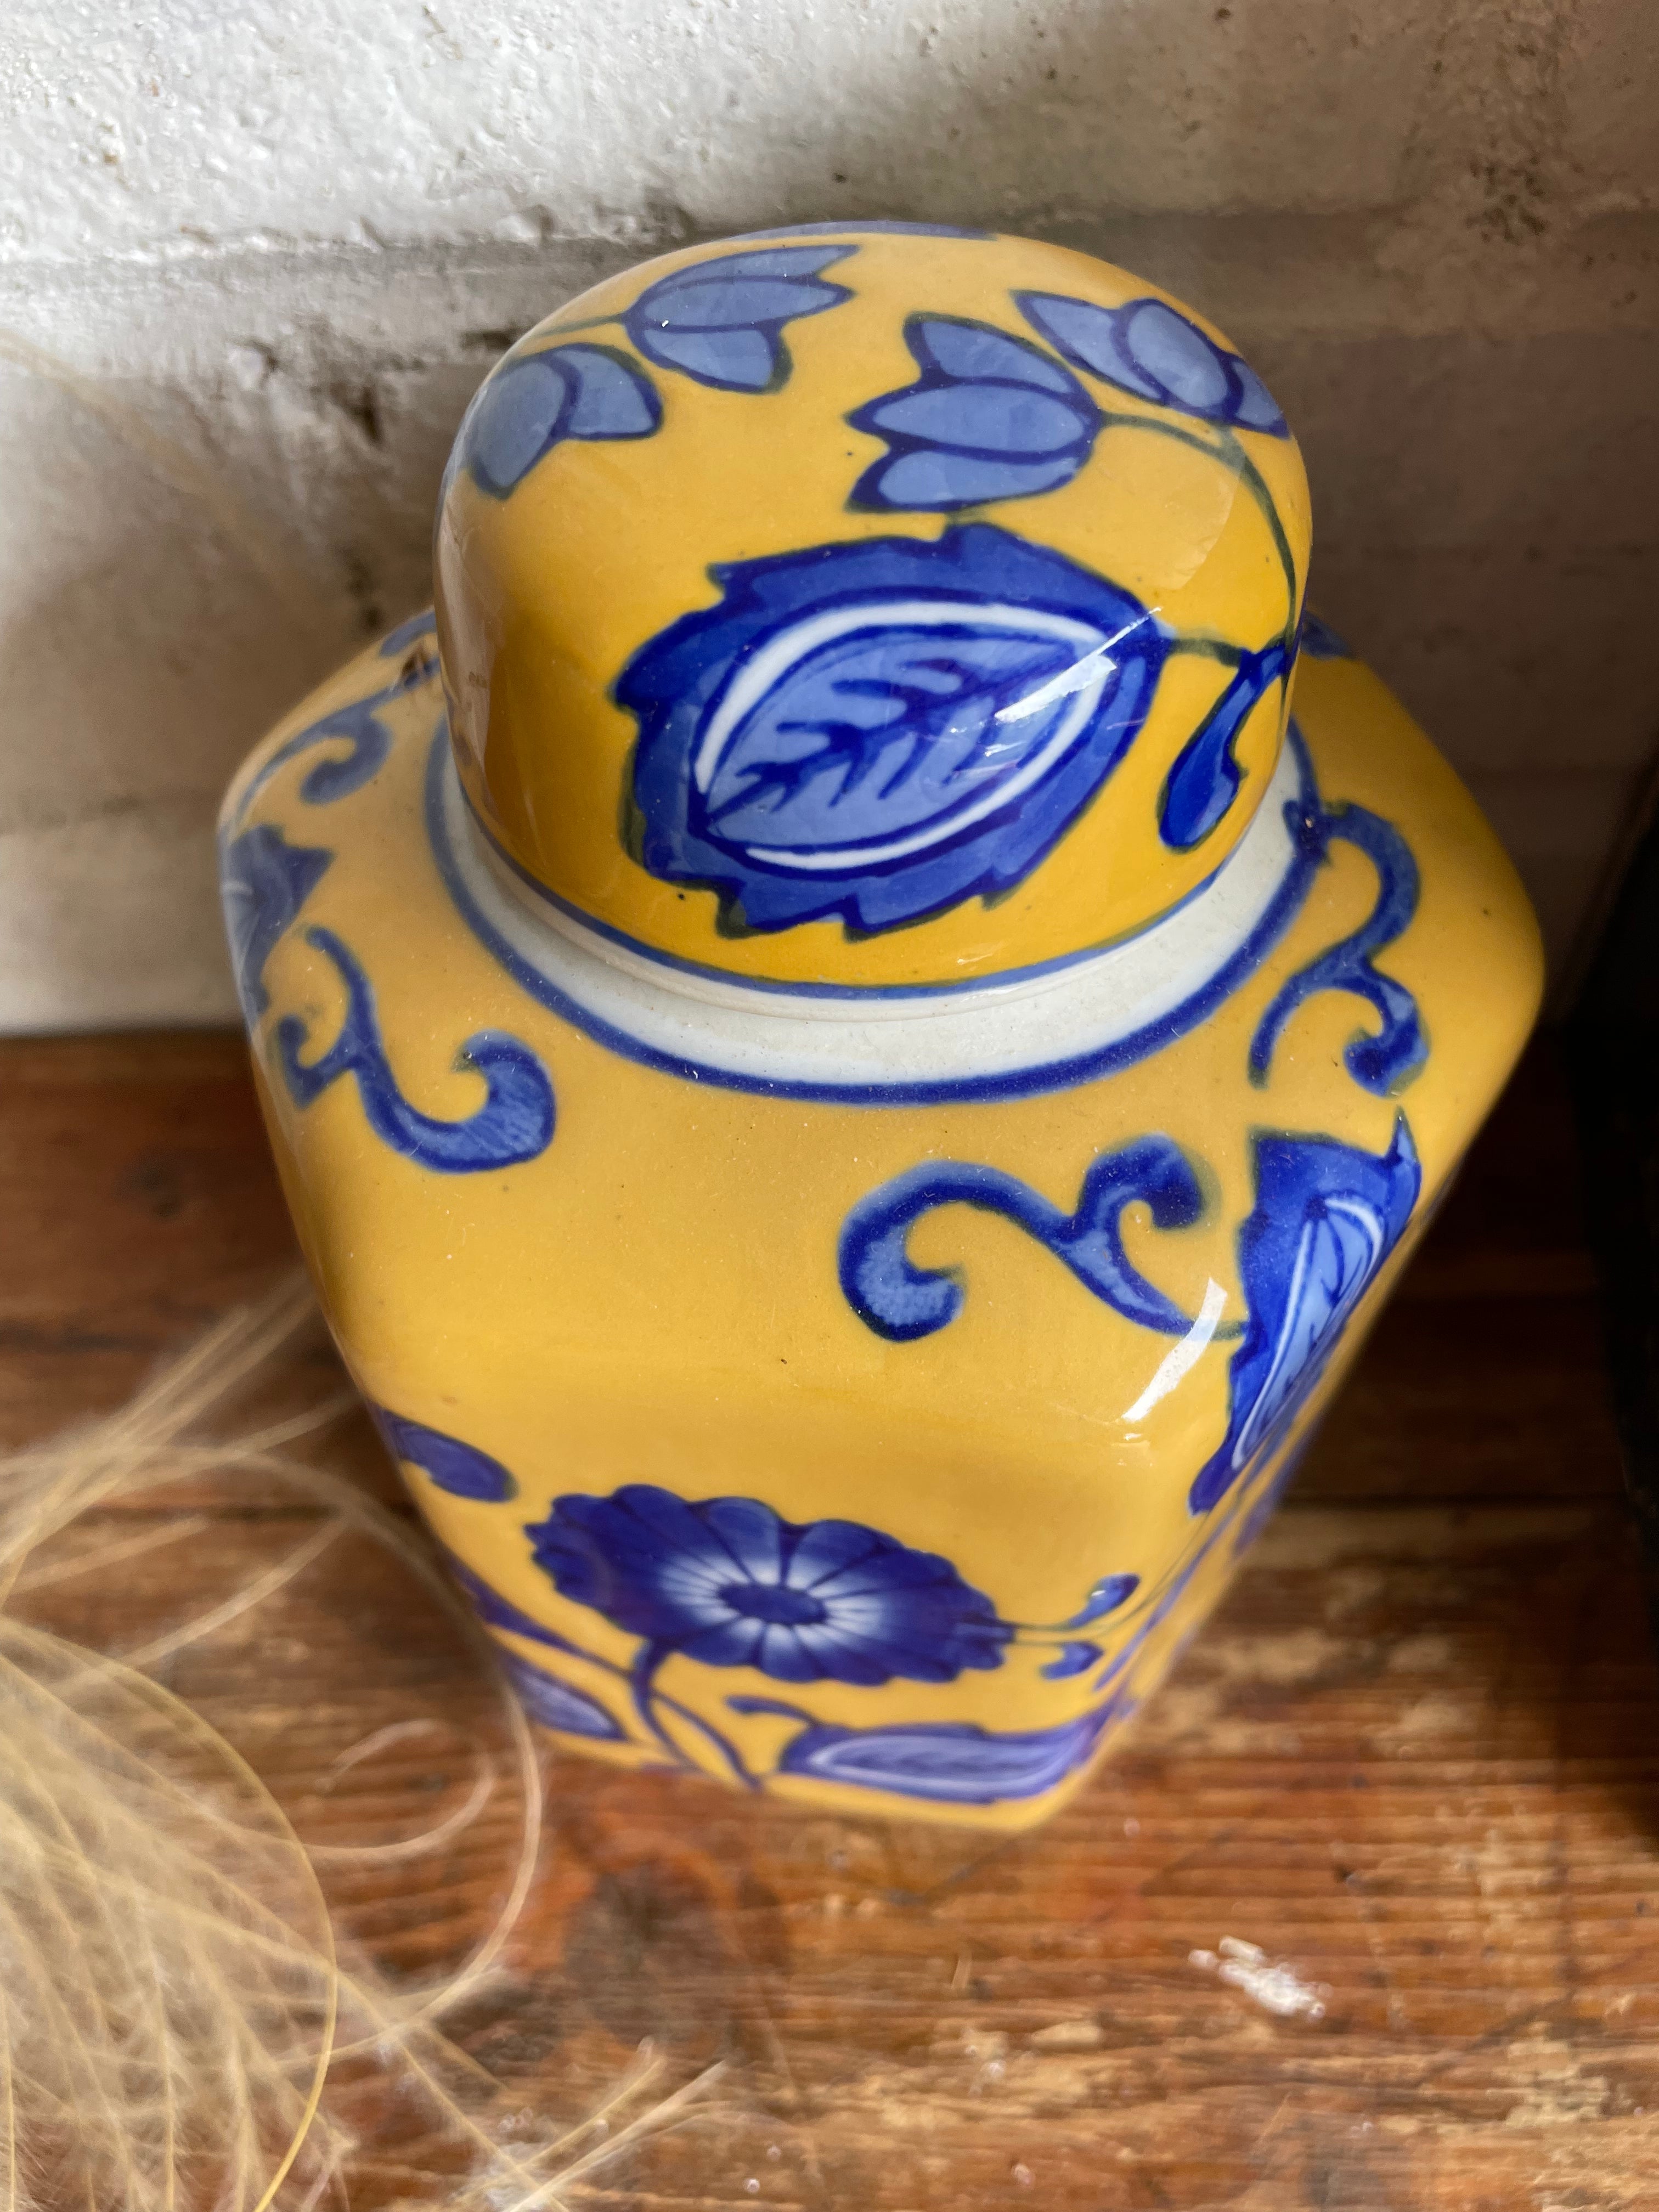 Antique Chinese Ginger Jar